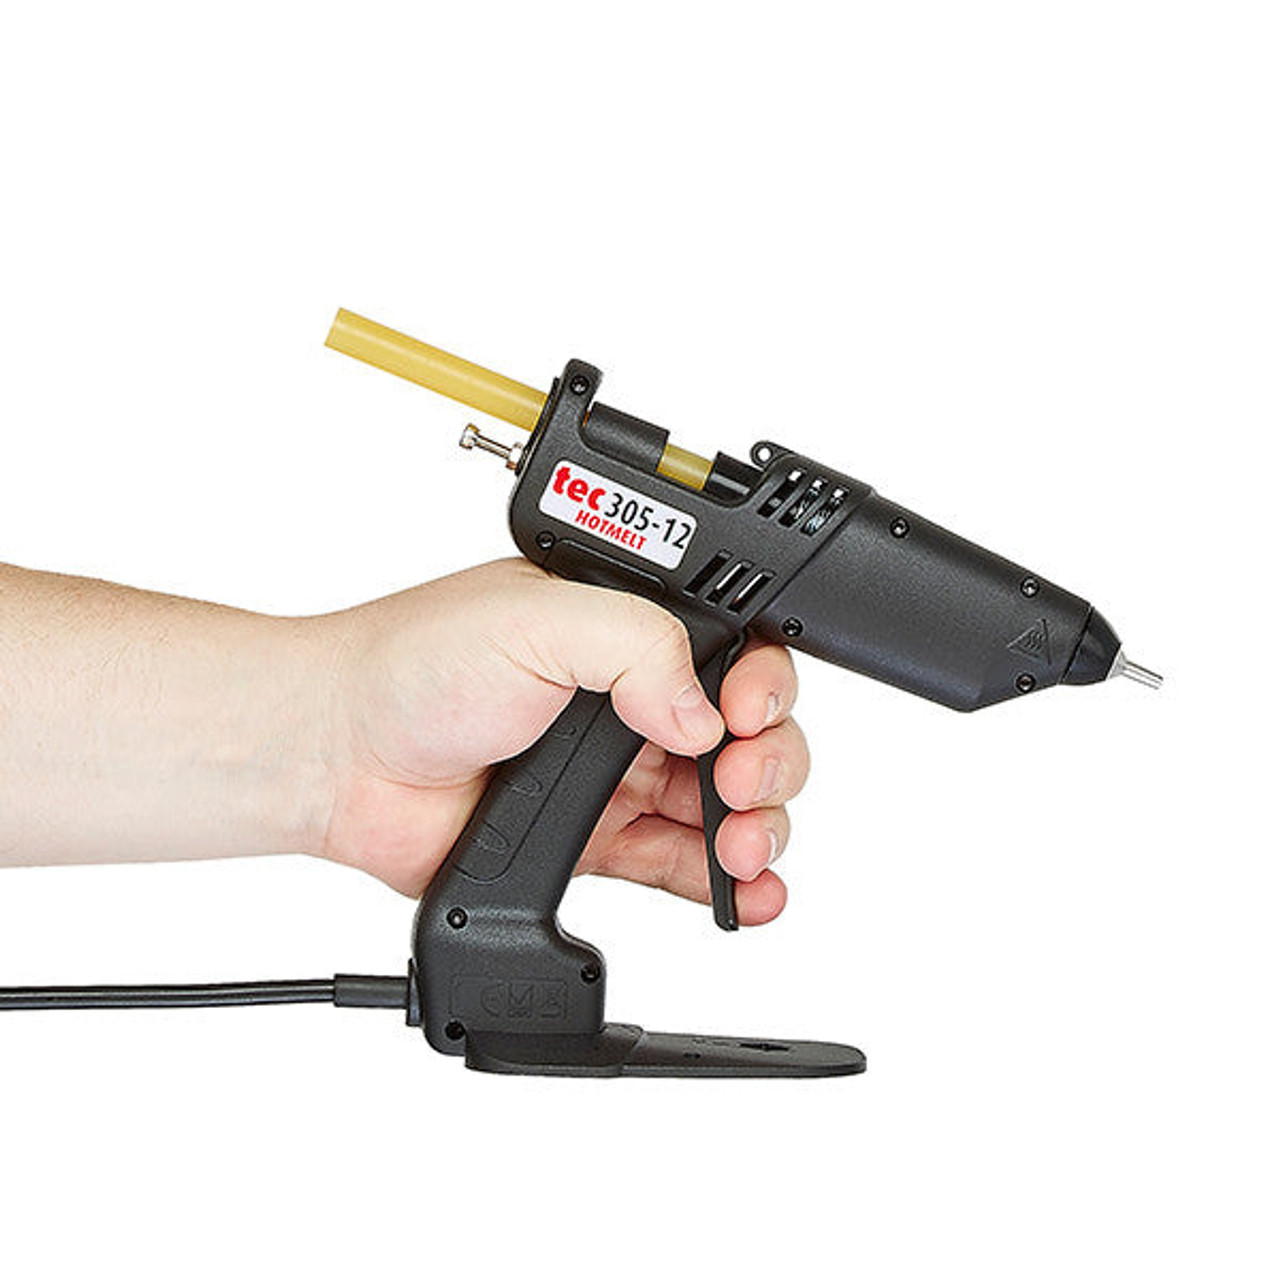 KNOTTEC Glue Gun | 305-12 Corded Industrial Glue Gun for Wood Repair